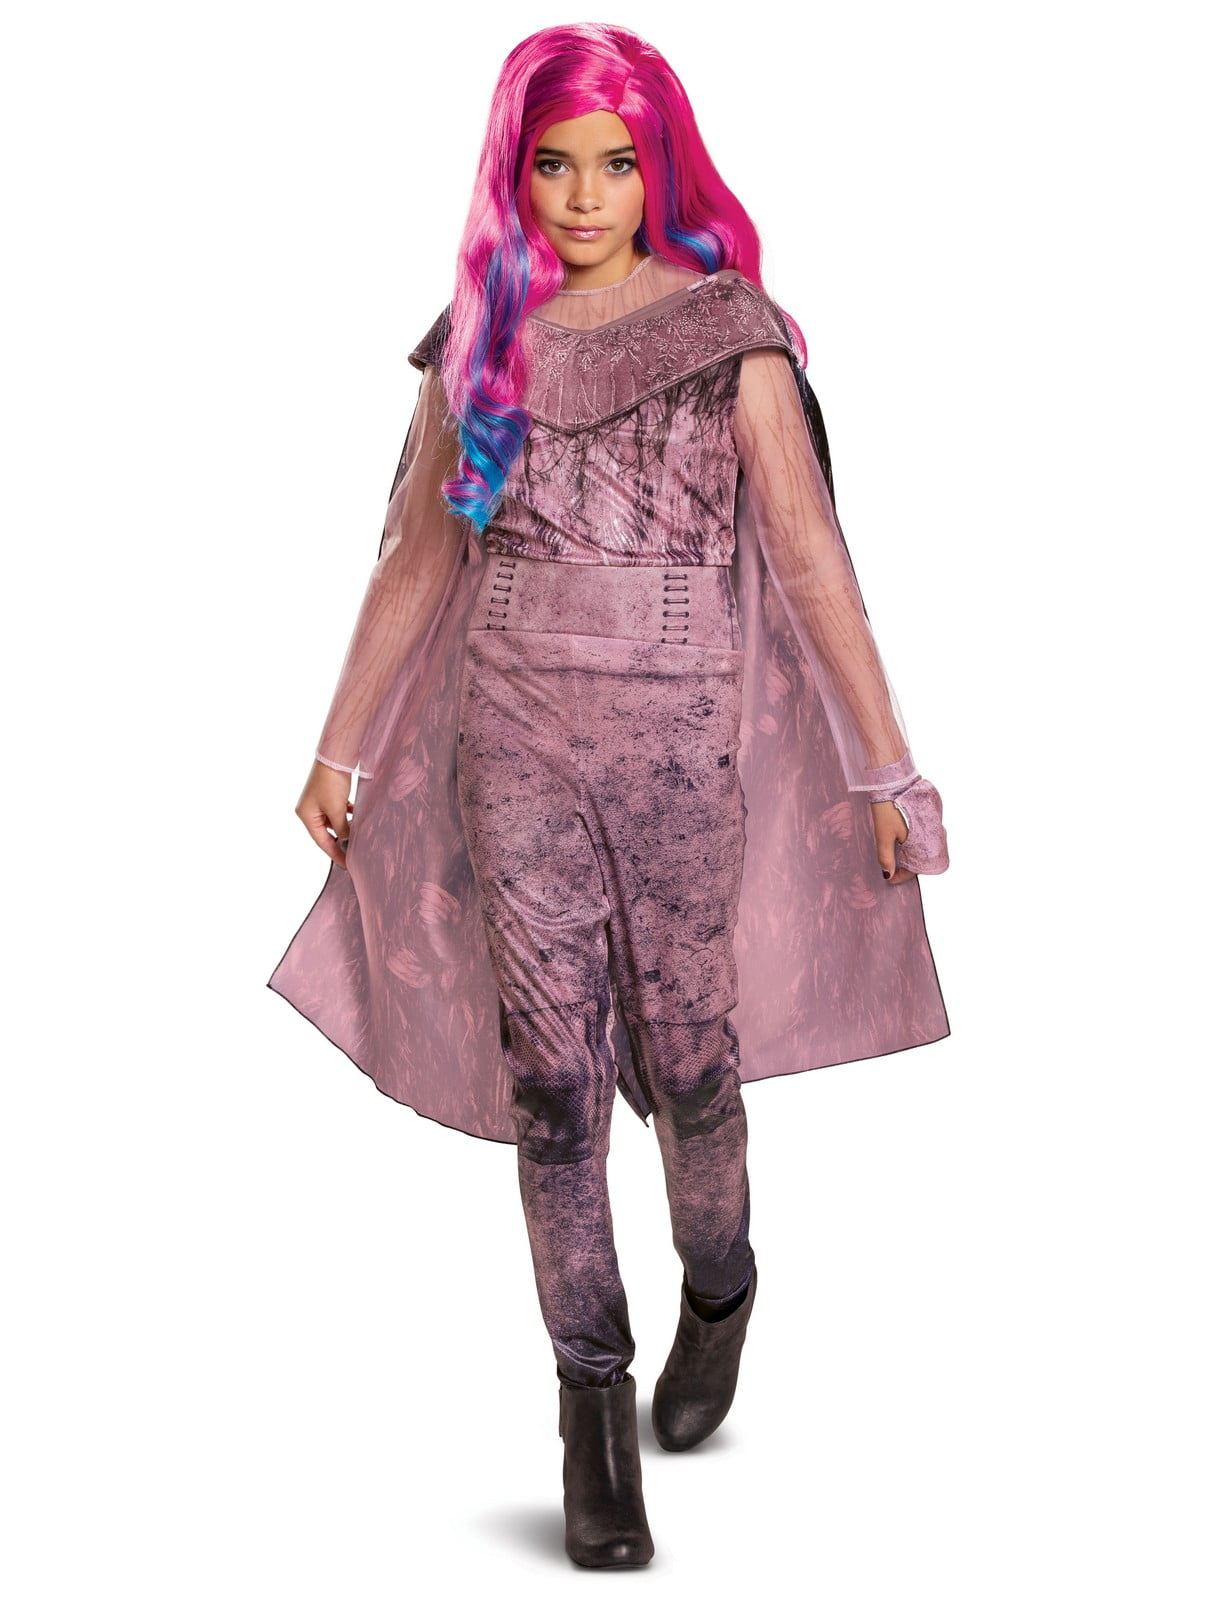 Disney Descendants 3 Audrey WIG Pink Hair Halloween Fortune Teller New 